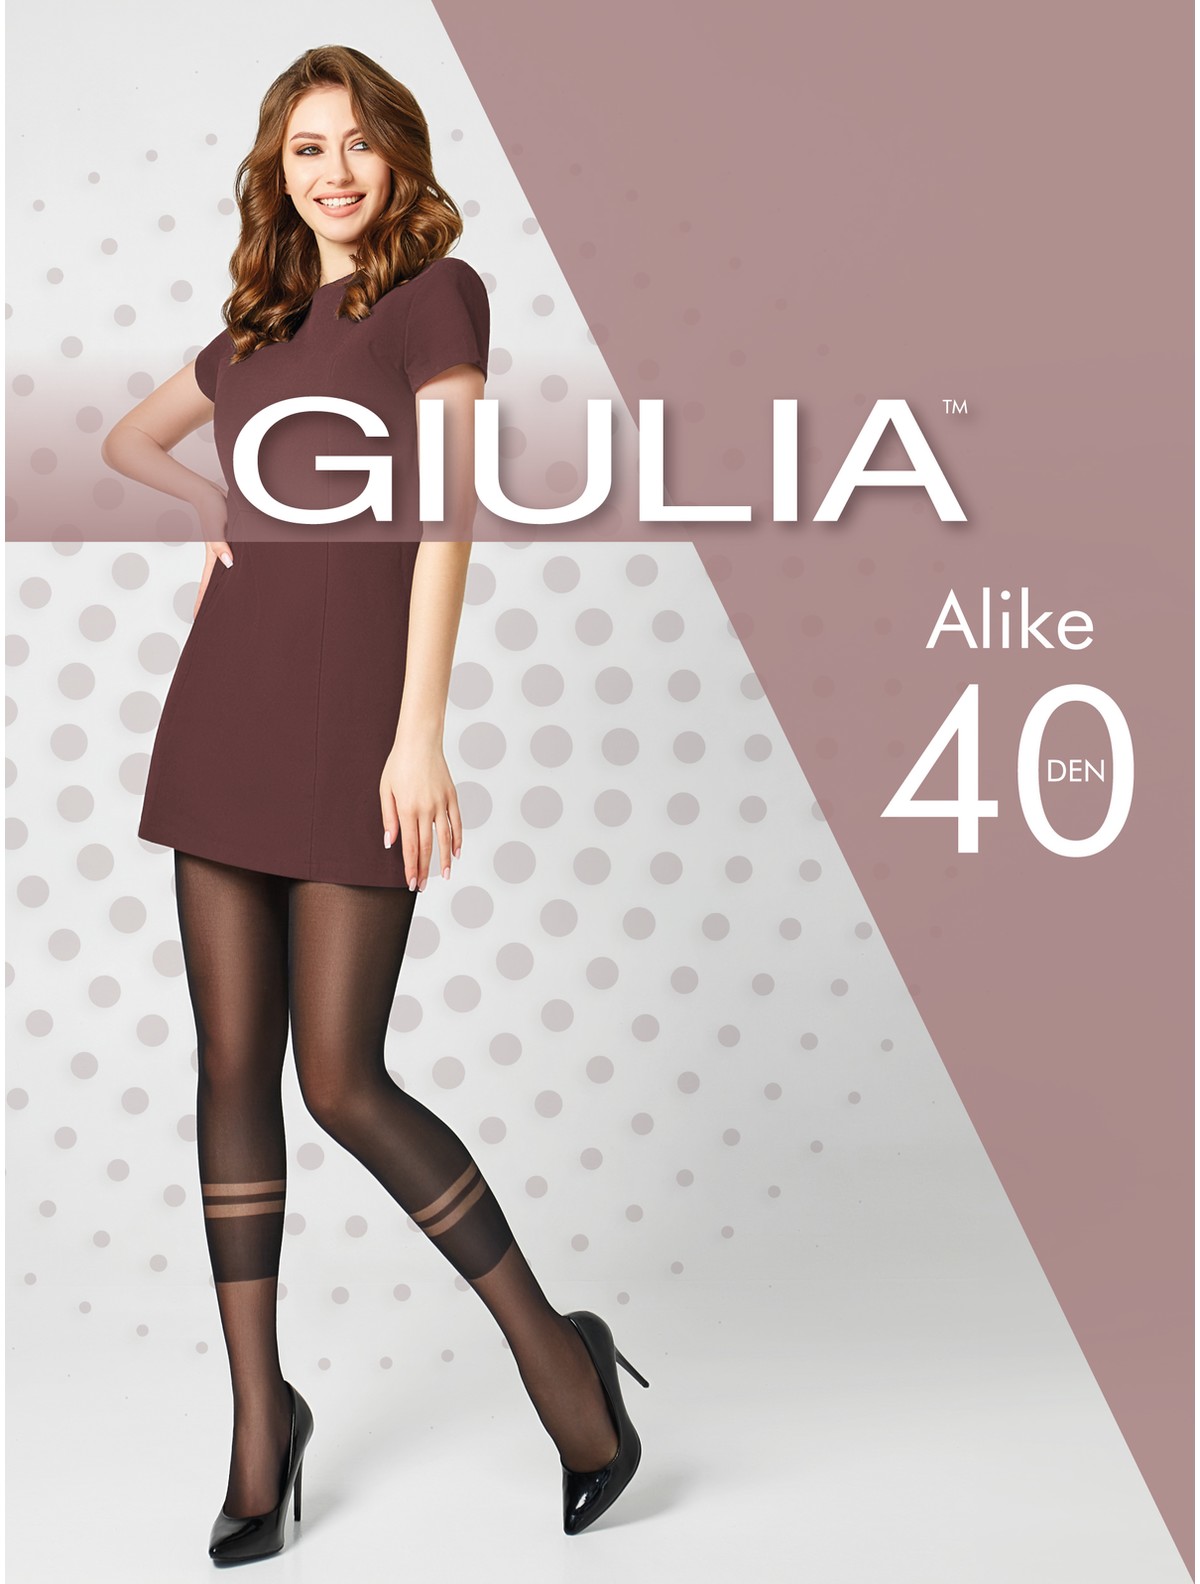 Giulia Alike 40 Model No1 - semiblickdicht Strumpfhosen von Giulia  Herbst-Fantas